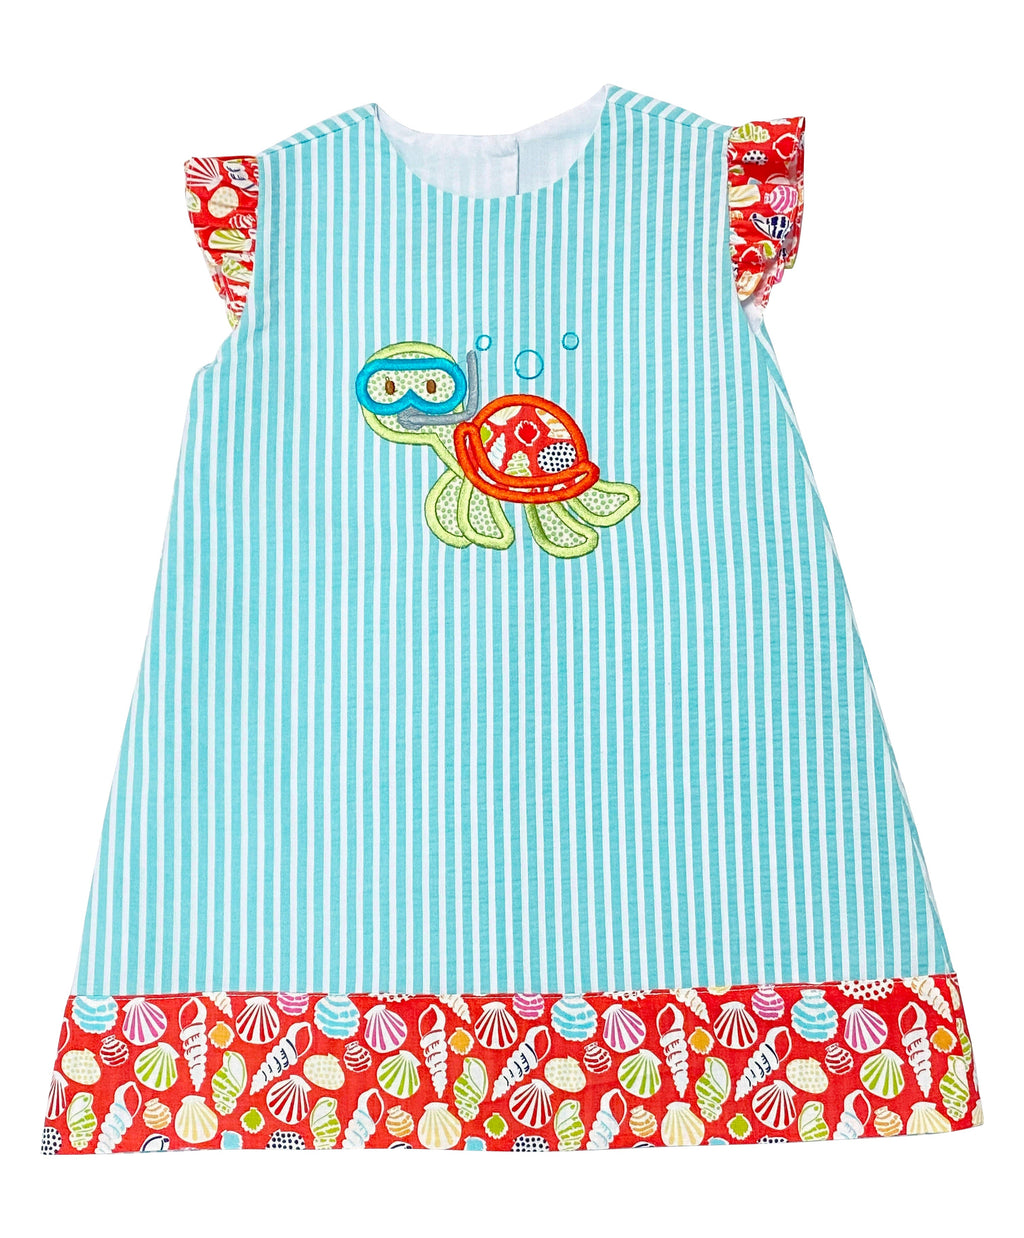 Turtle A-Line dress - Little Threads Inc. Children's Clothing